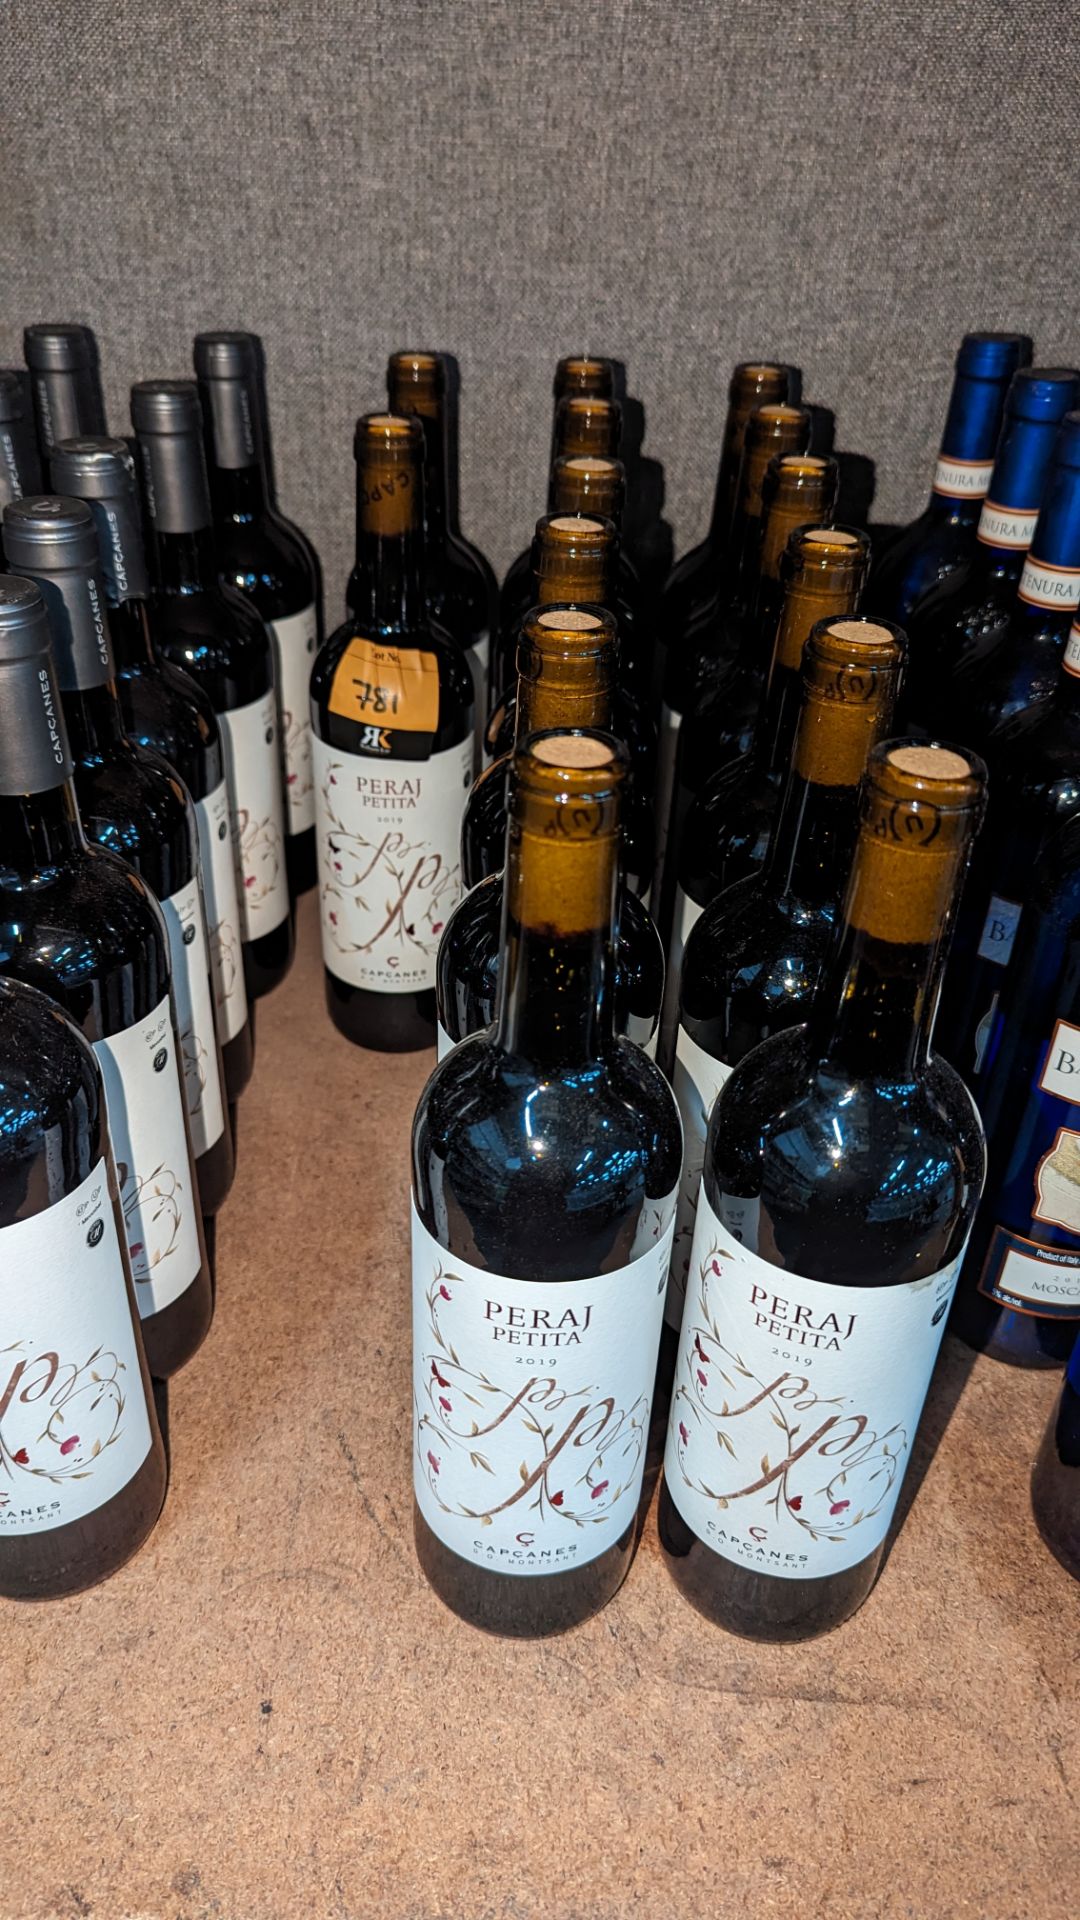 14 bottles of Celler de Capcanes Peraj Petita 2019 Spanish red wine sold under AWRS number XQAW00000